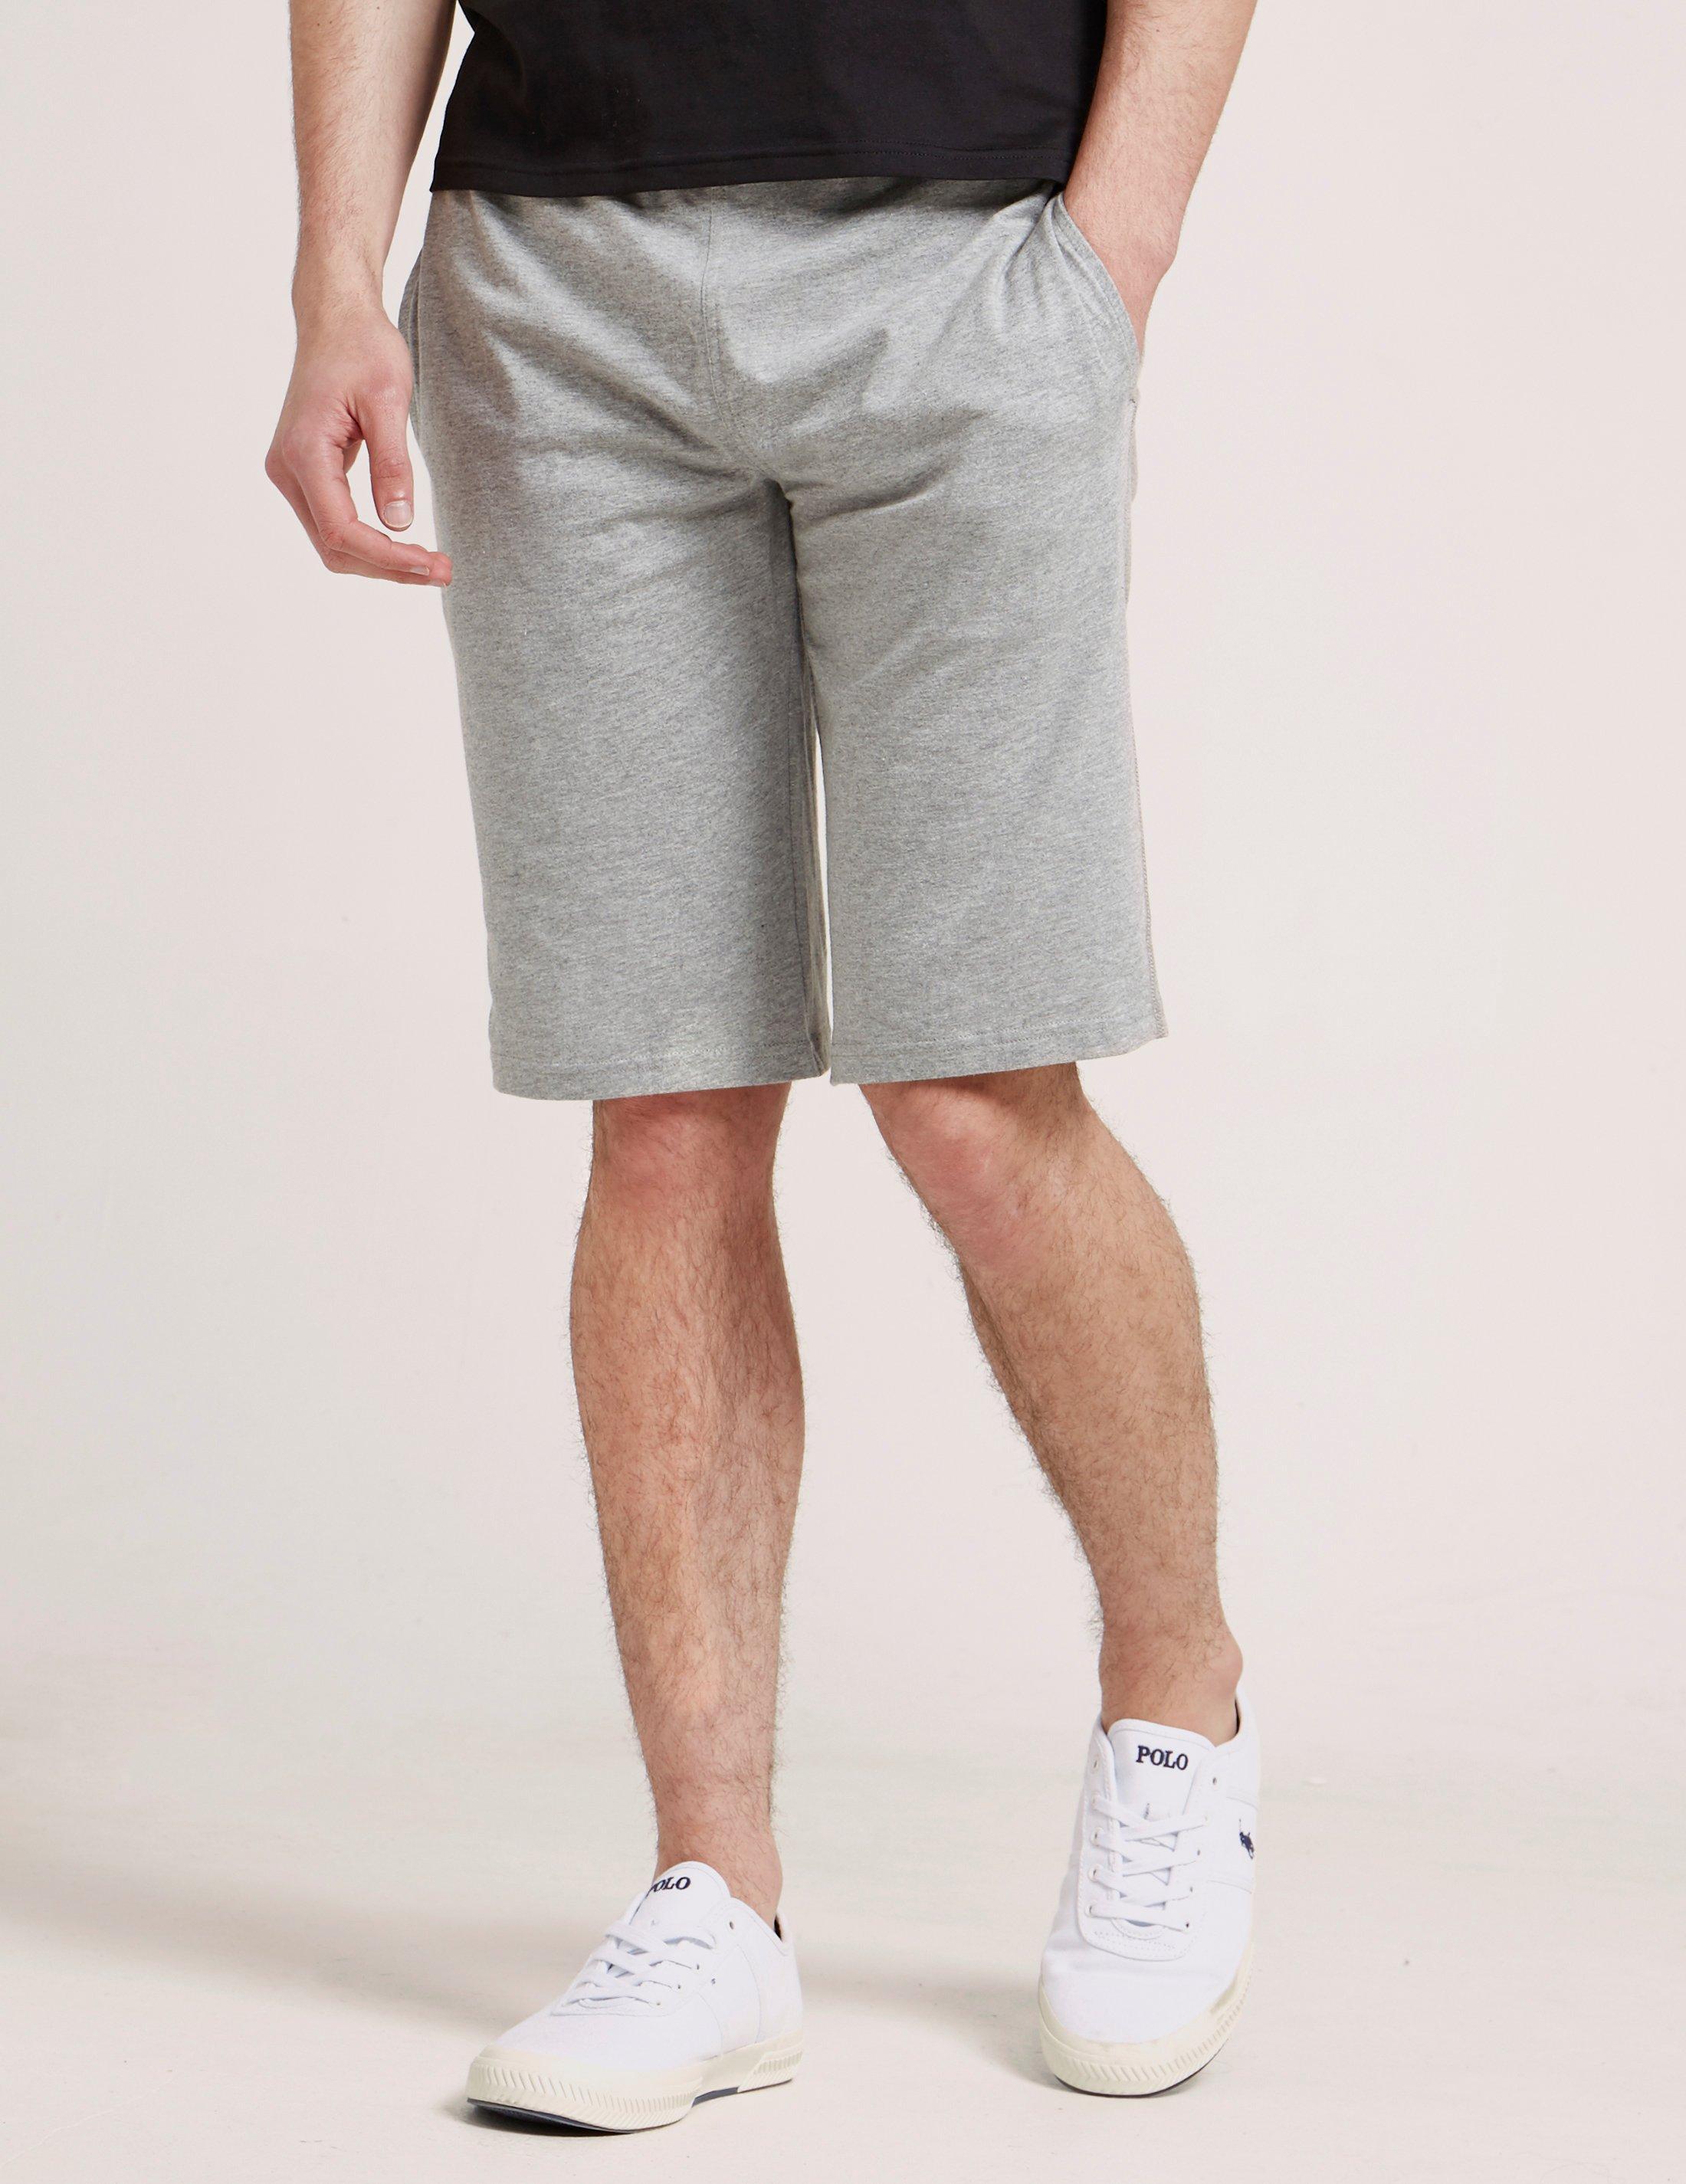 Polo ralph lauren Jersey Shorts in Gray for Men | Lyst